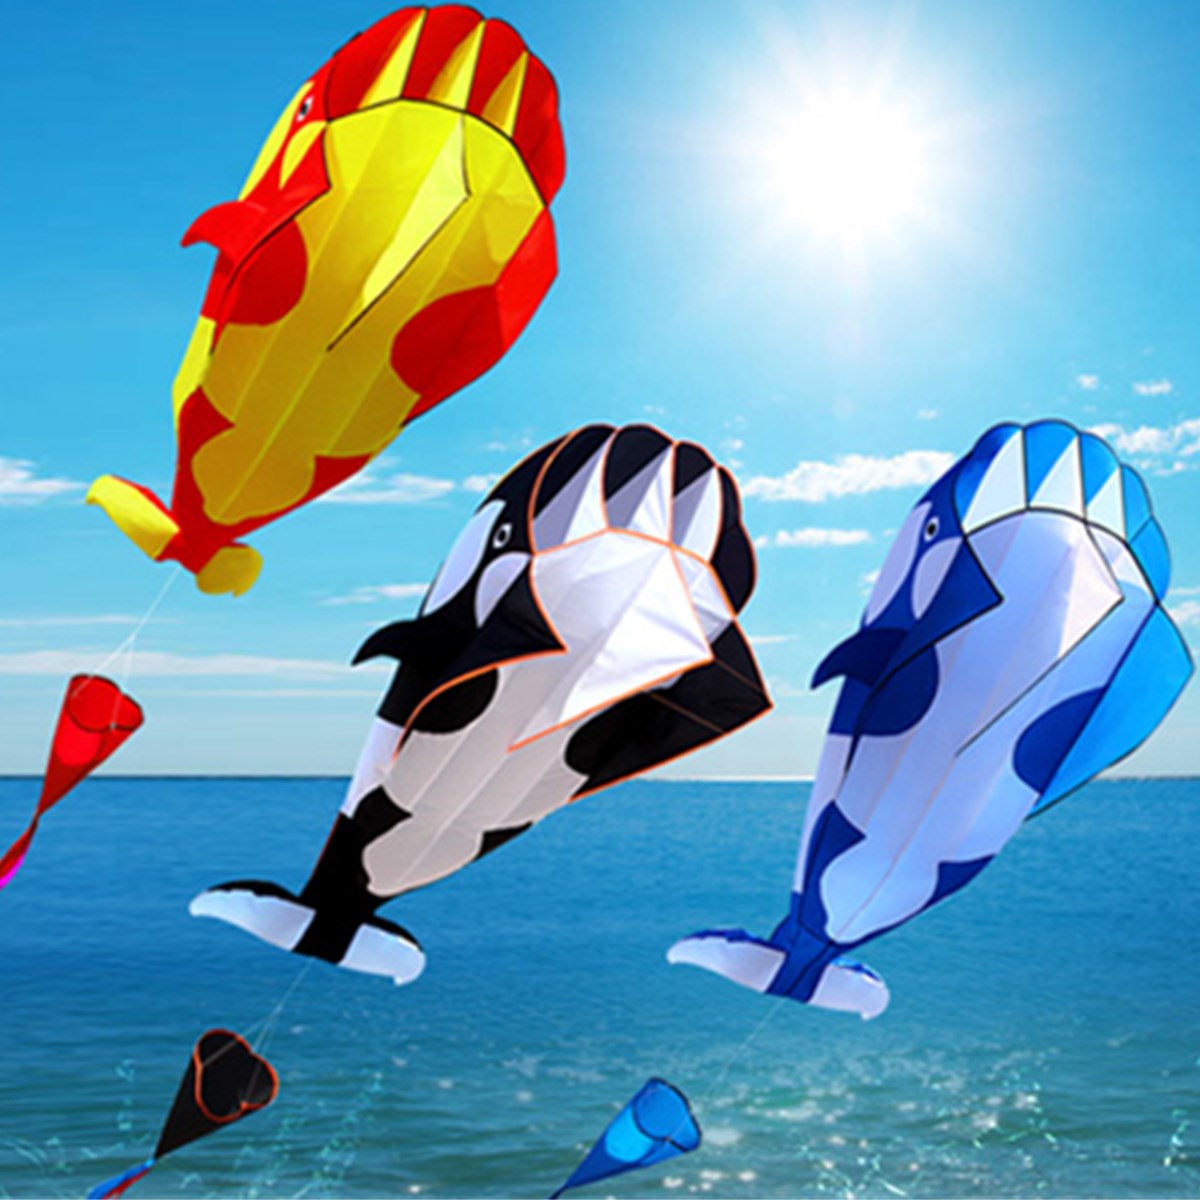 

Whale Kite Single Line Stunt Kite Outdoor Sports Toy Children Kids